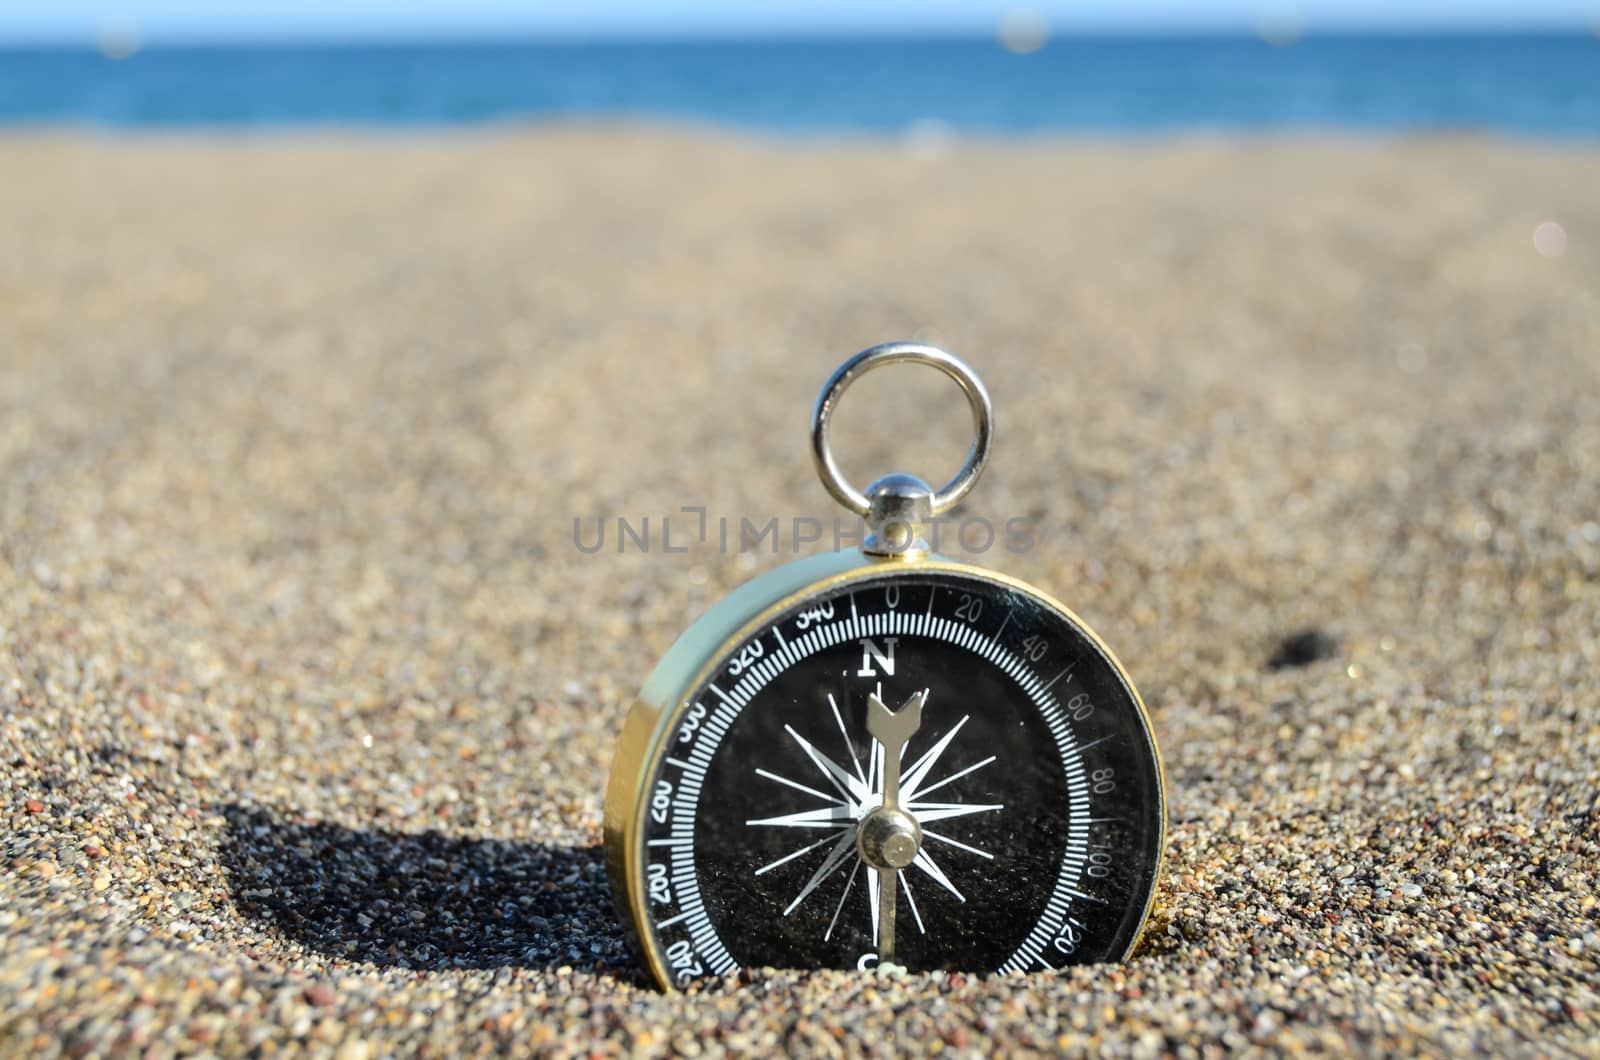 Orientation Concept One Compass on the Beach near the Atlantic Ocean